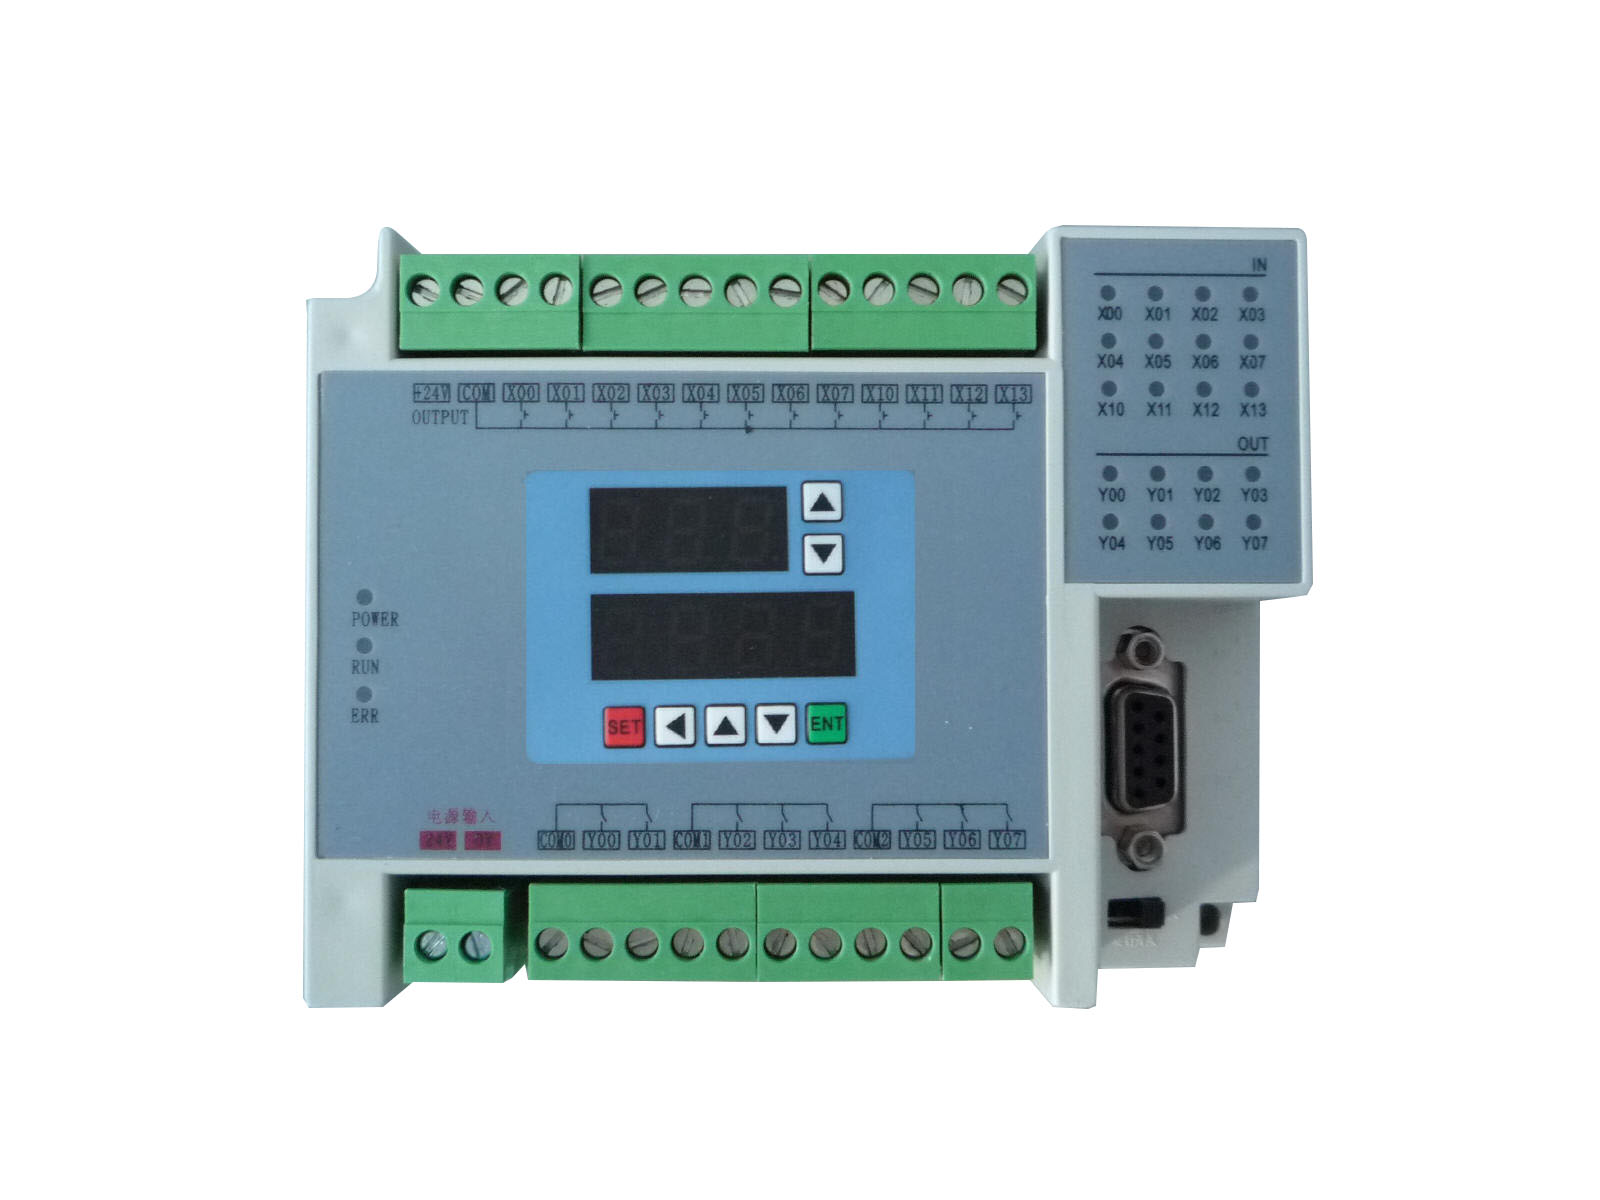 TM1S-20MR-2V2V 国产PLC 国产三菱PLC 国产PLC厂家 国产控制器 国产PLC价格